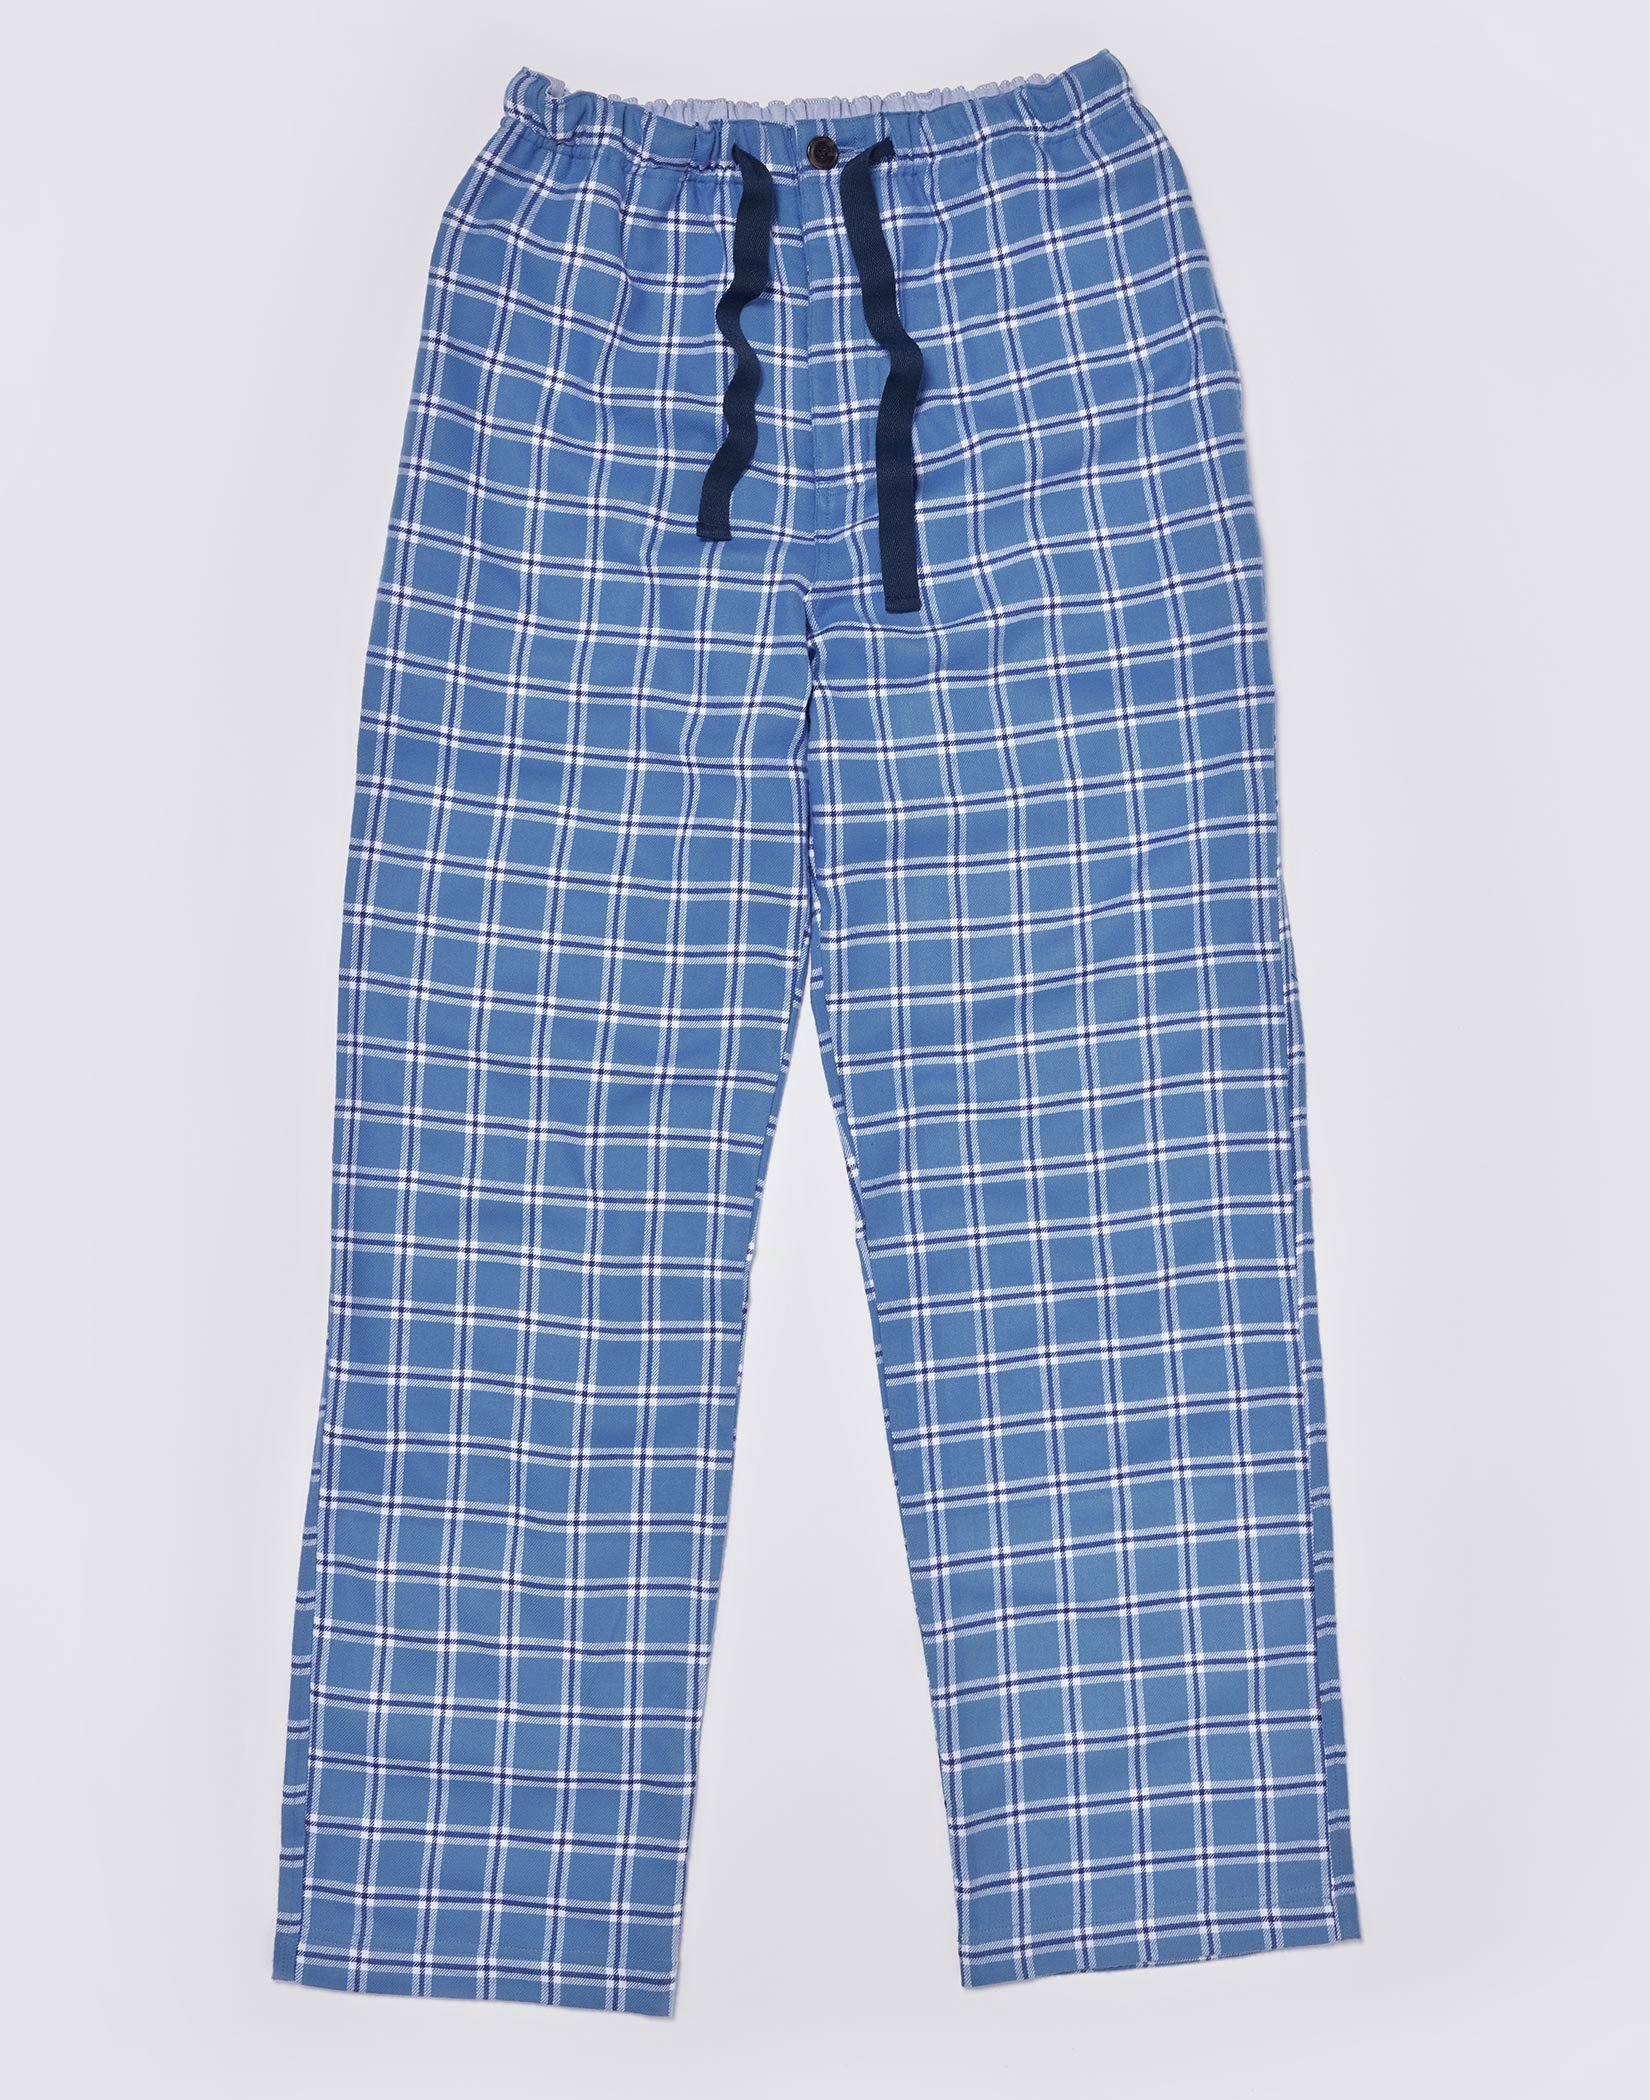 Men’s Pyjamas & Nightwear | Joseph Turner